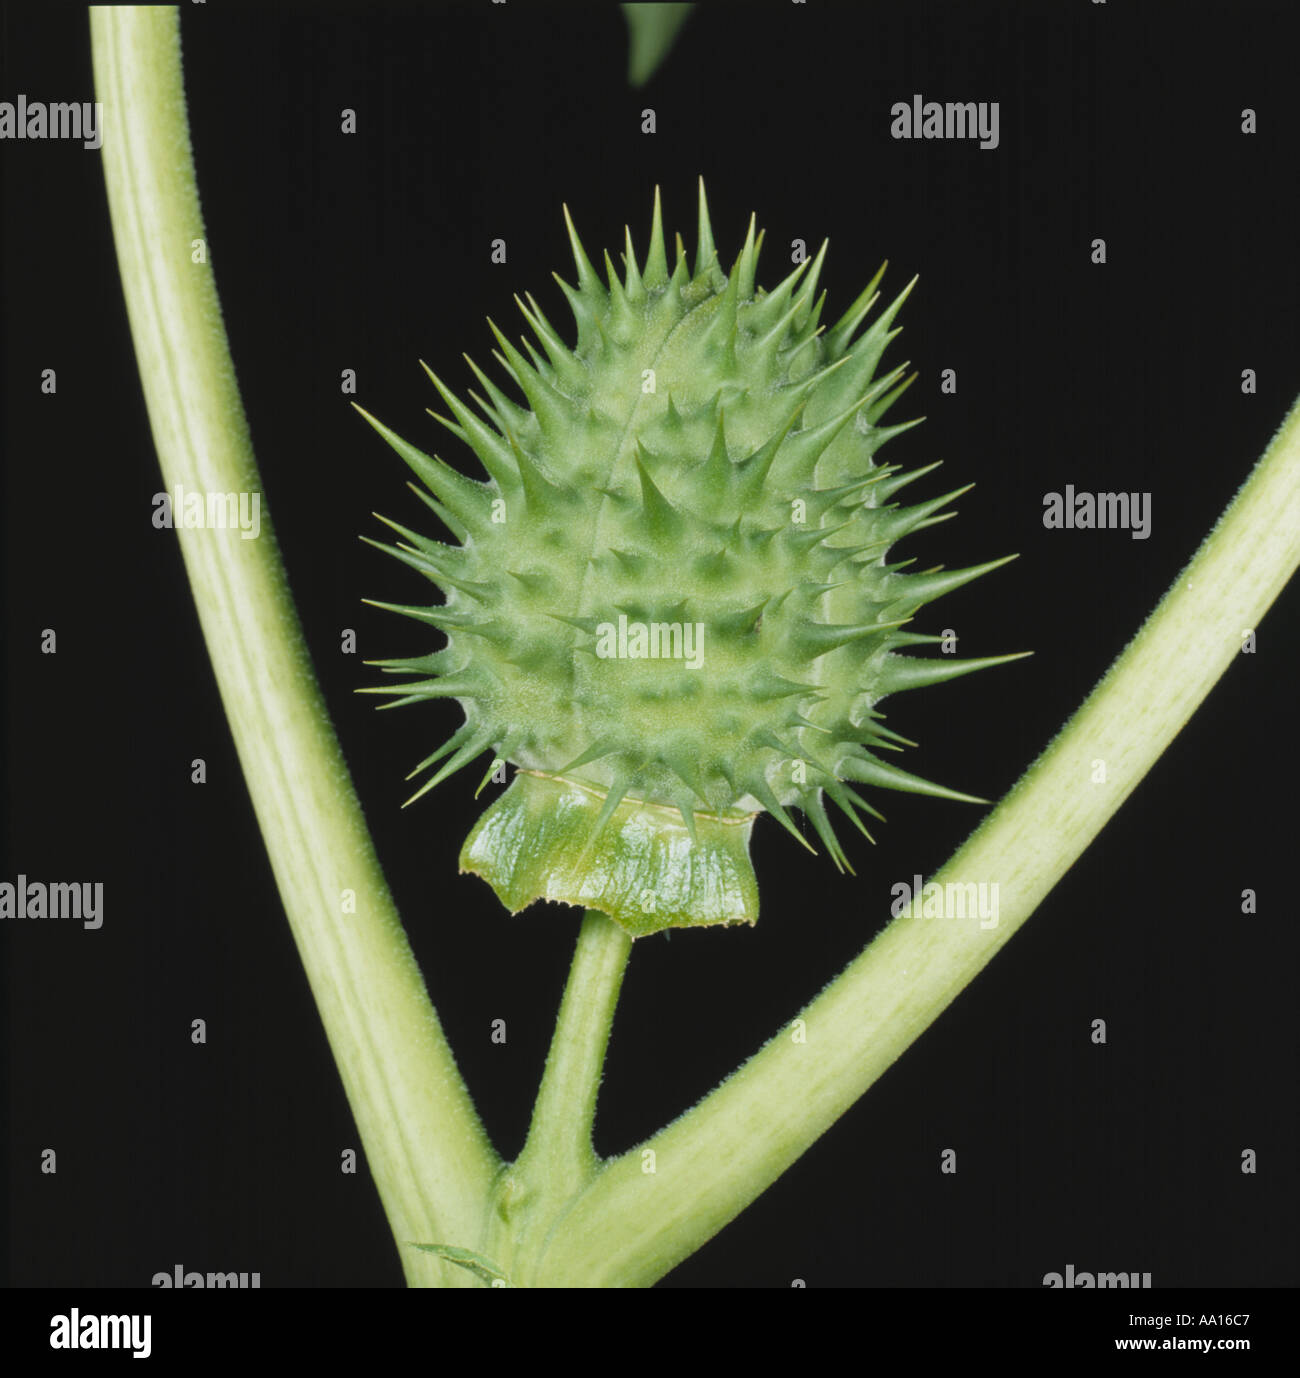 Dornapfel- oder Jimson-Unkraut (Datura stamonium) spike unreife grüne Samenschote Stockfoto